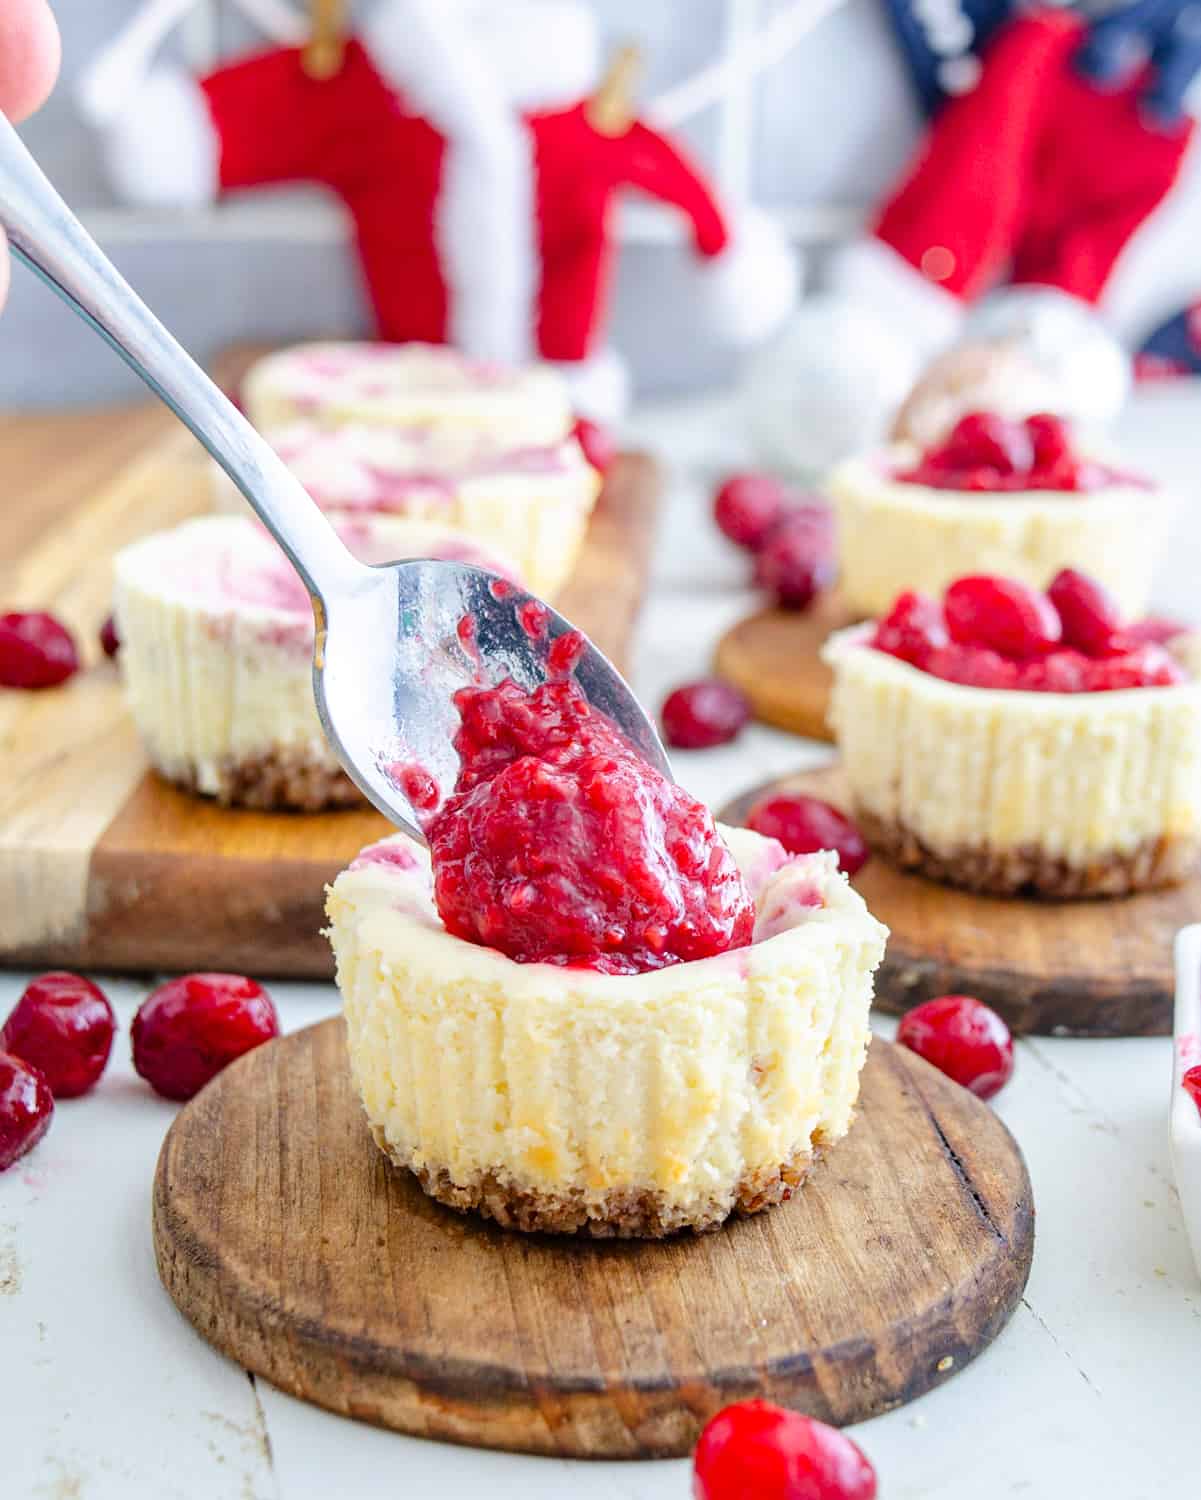 Cran raspberry compote being spooned onto a mini keto cheesecake.